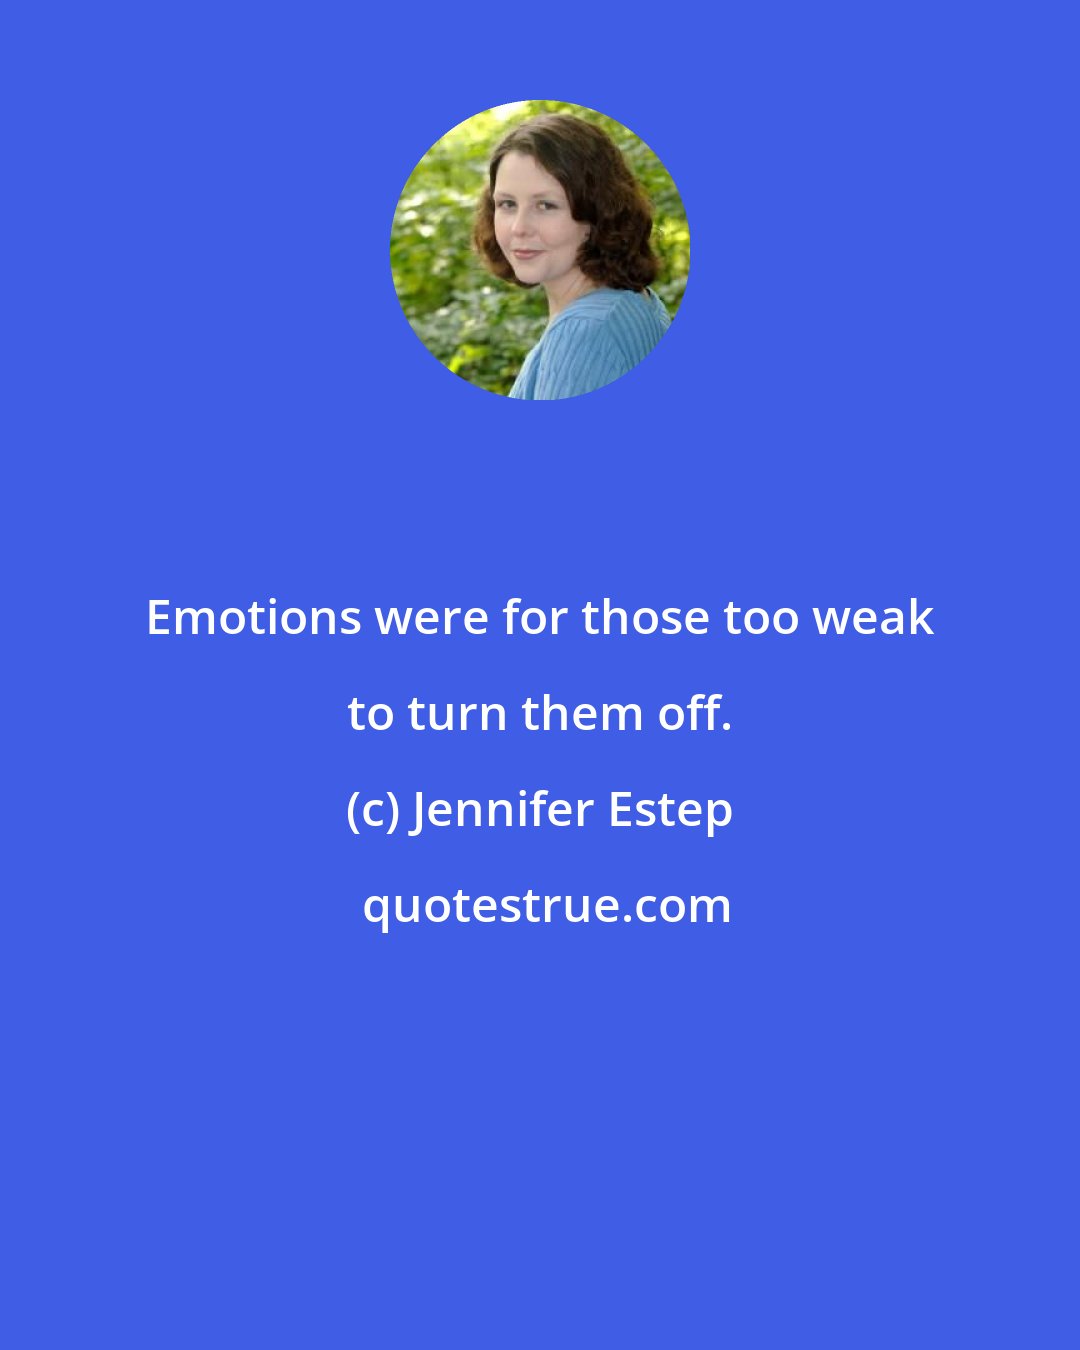 Jennifer Estep: Emotions were for those too weak to turn them off.